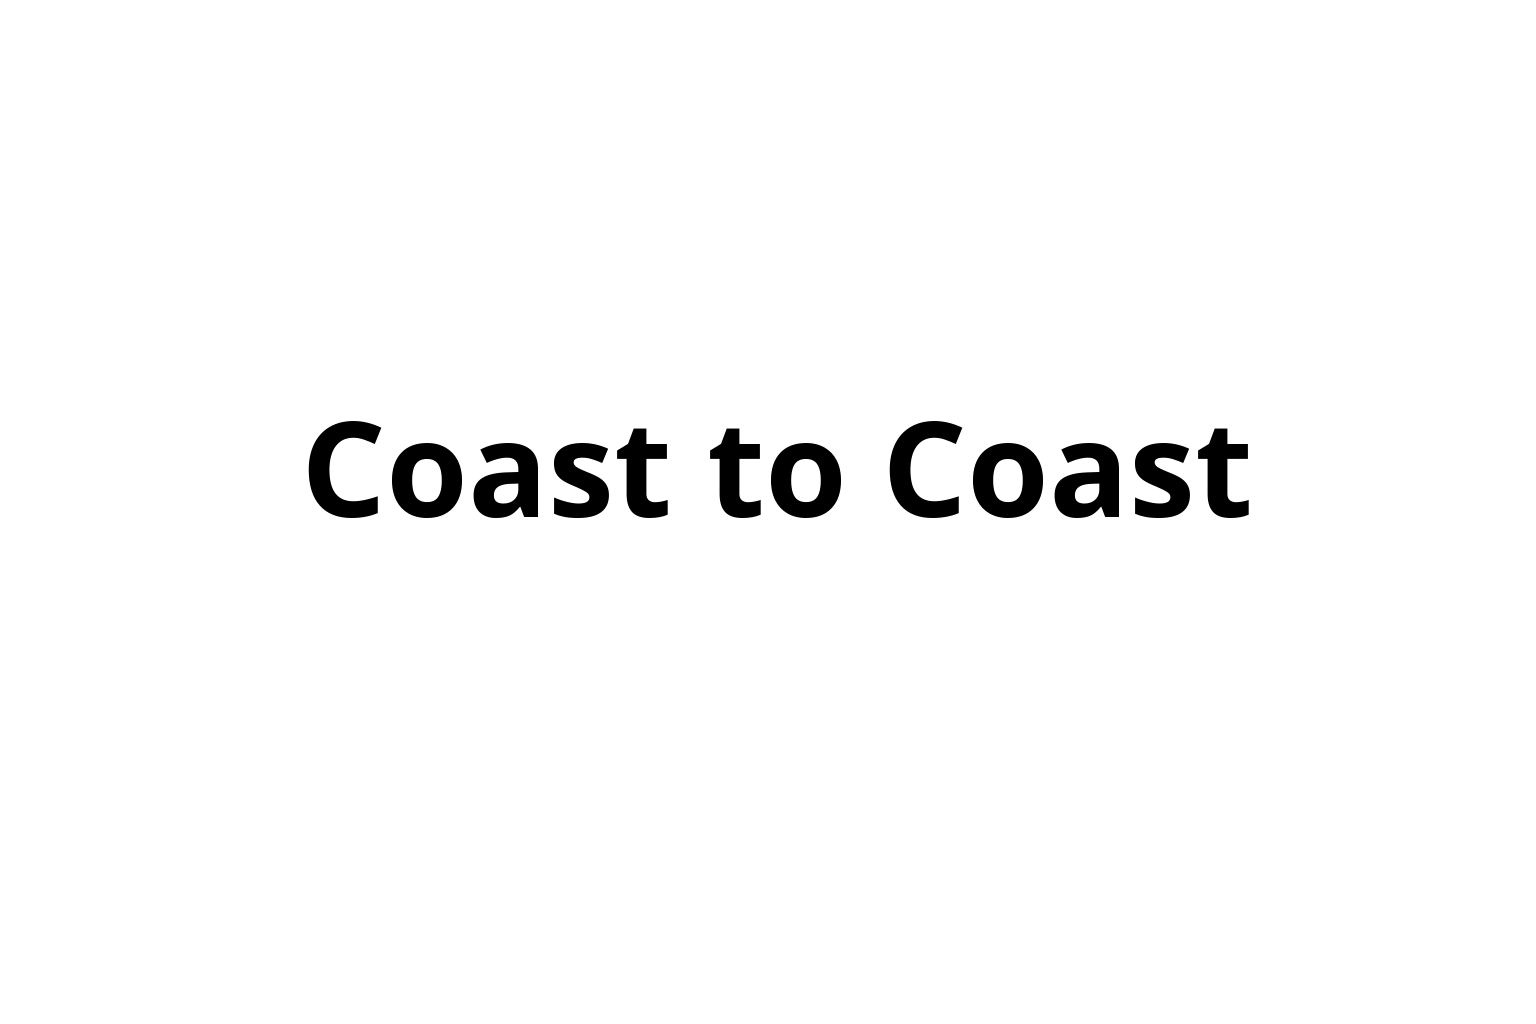 Coast to Coast International